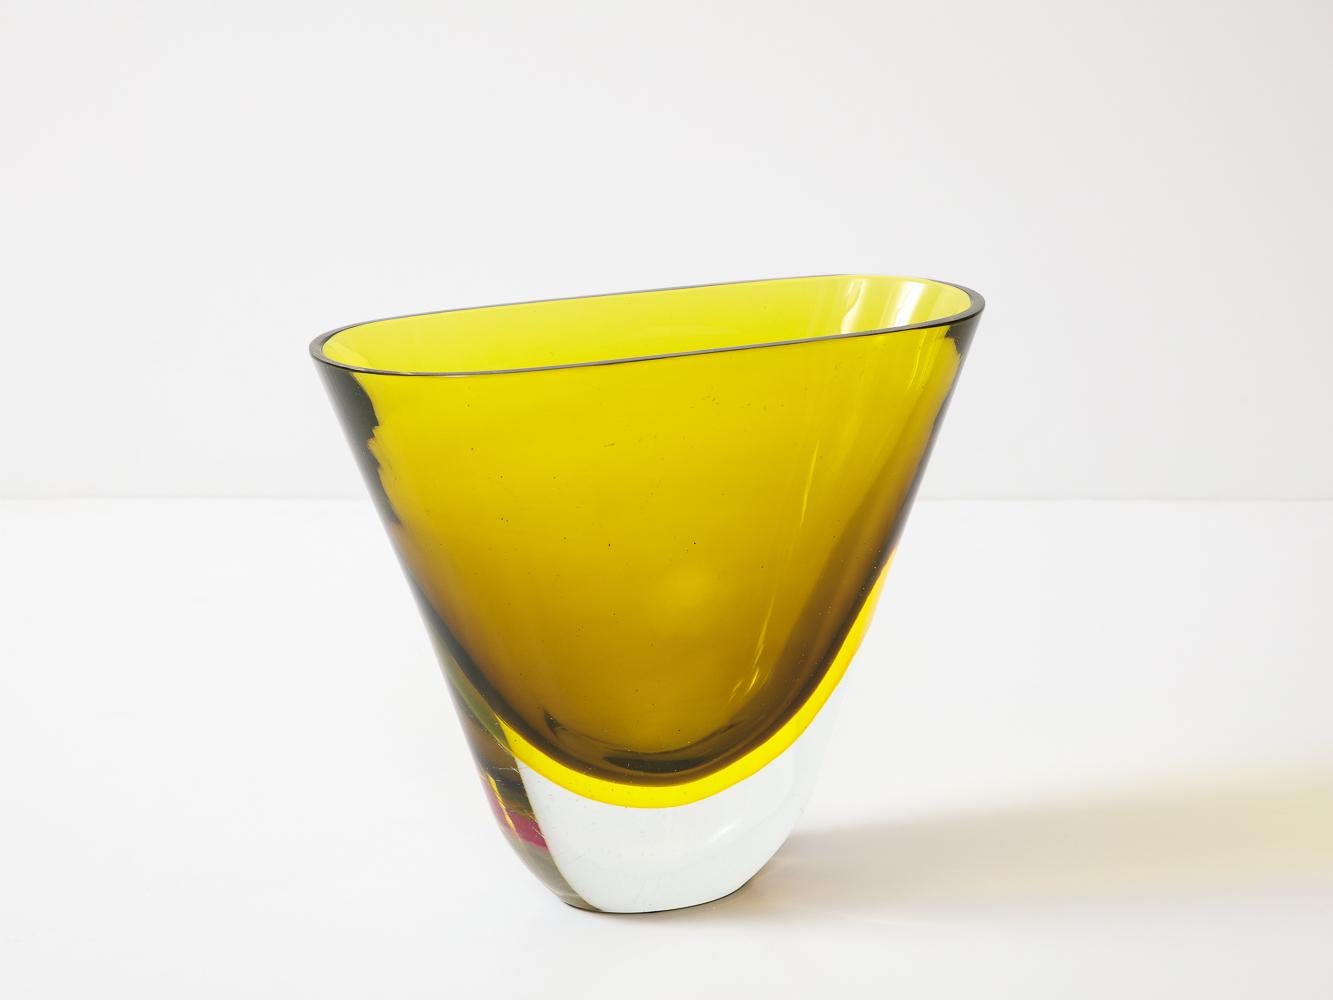 Vase aus mundgeblasenem Murano-Glas mit gelbem und klarem Glas.